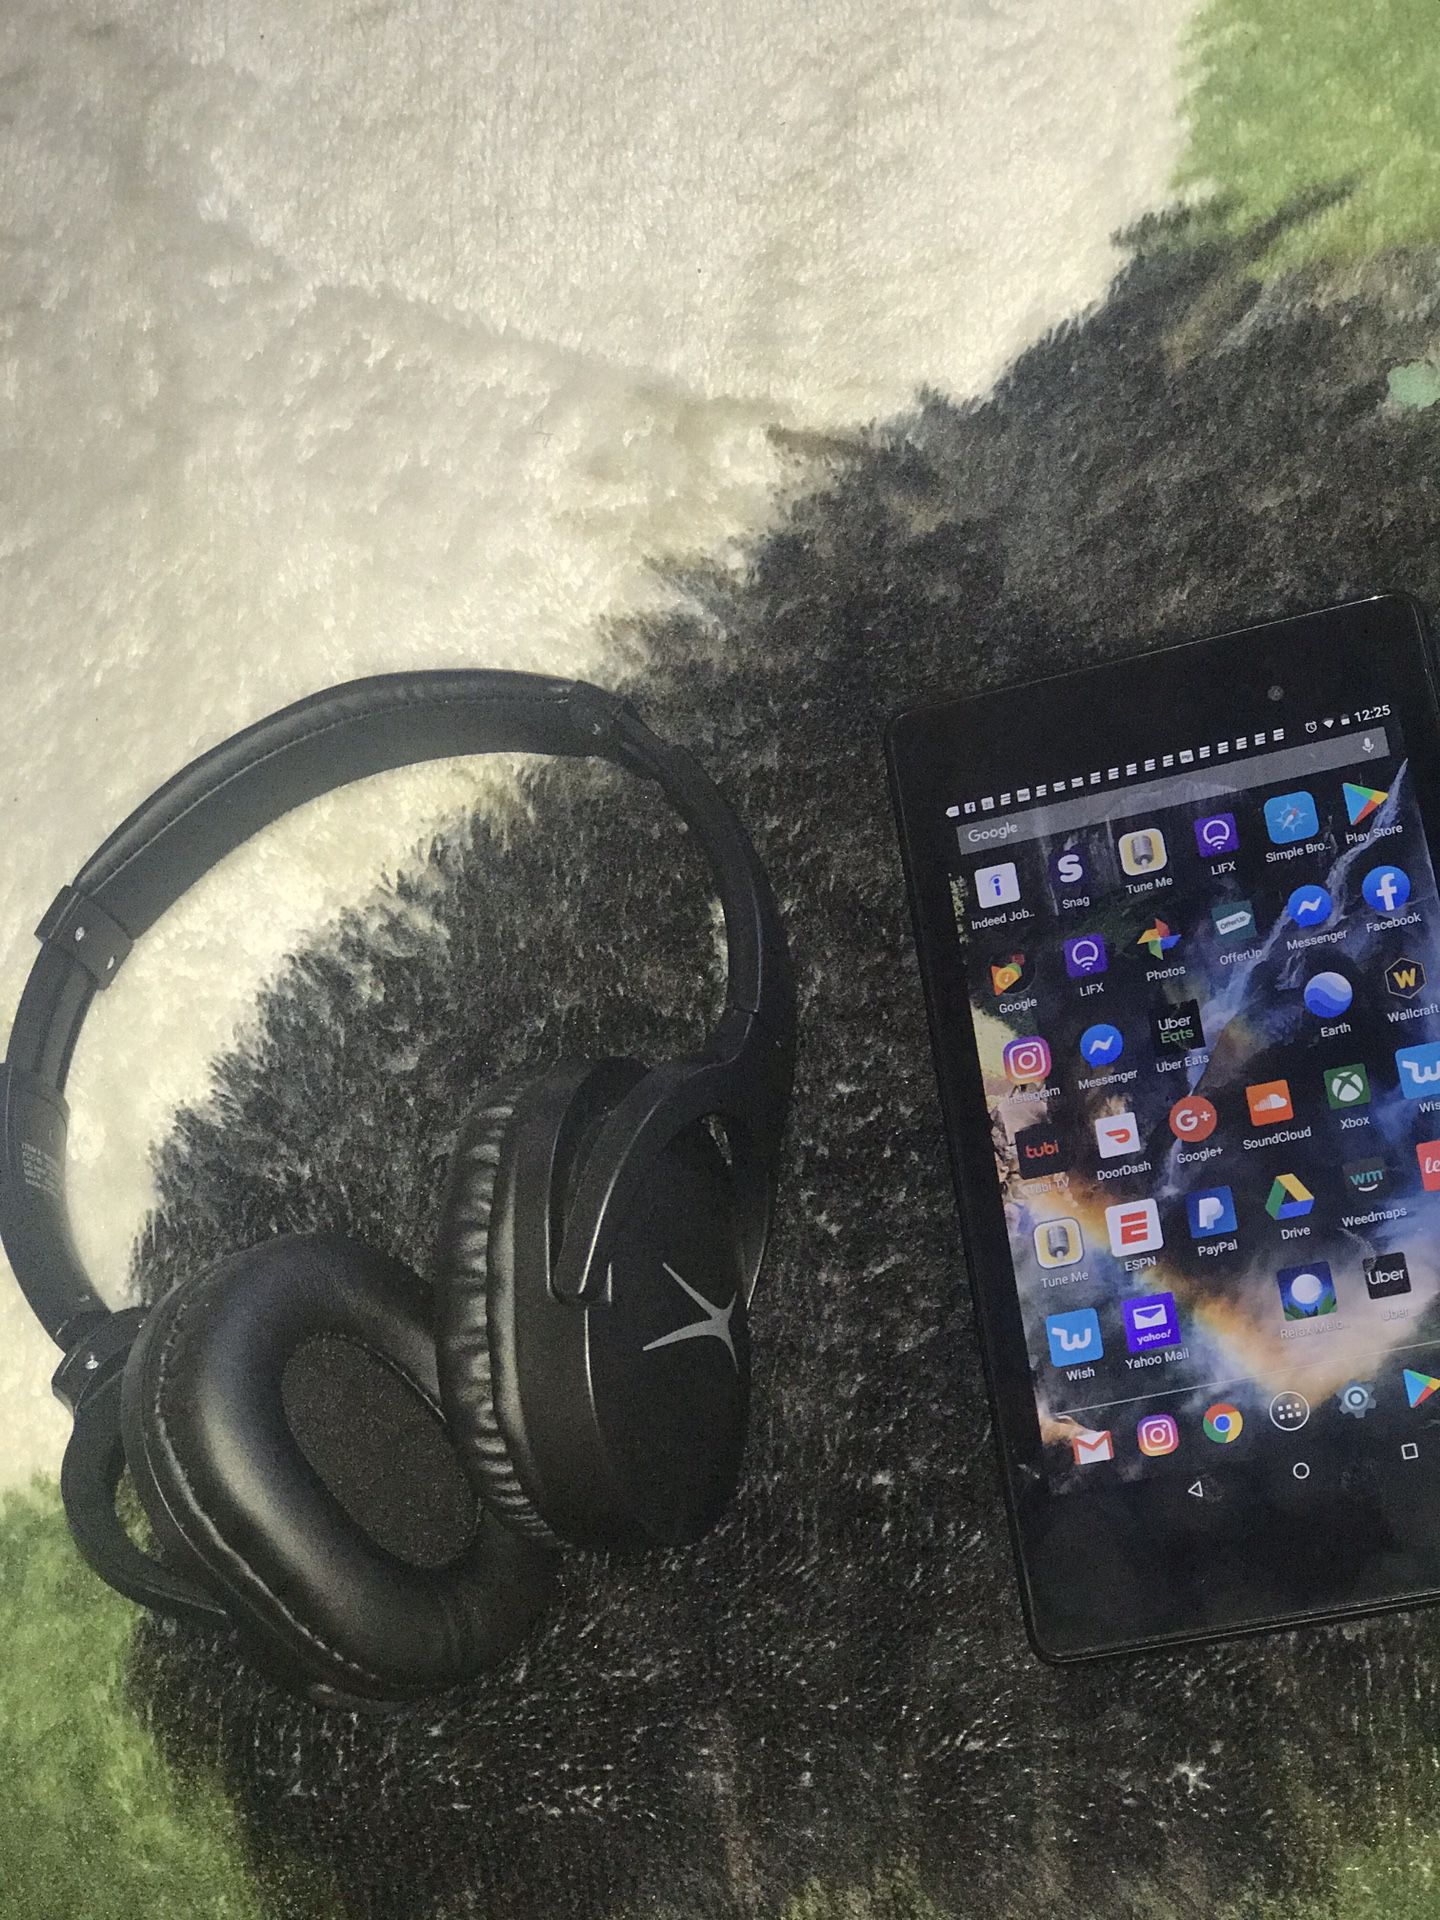 Nexus tablet fast processor and Bluetooth headphones